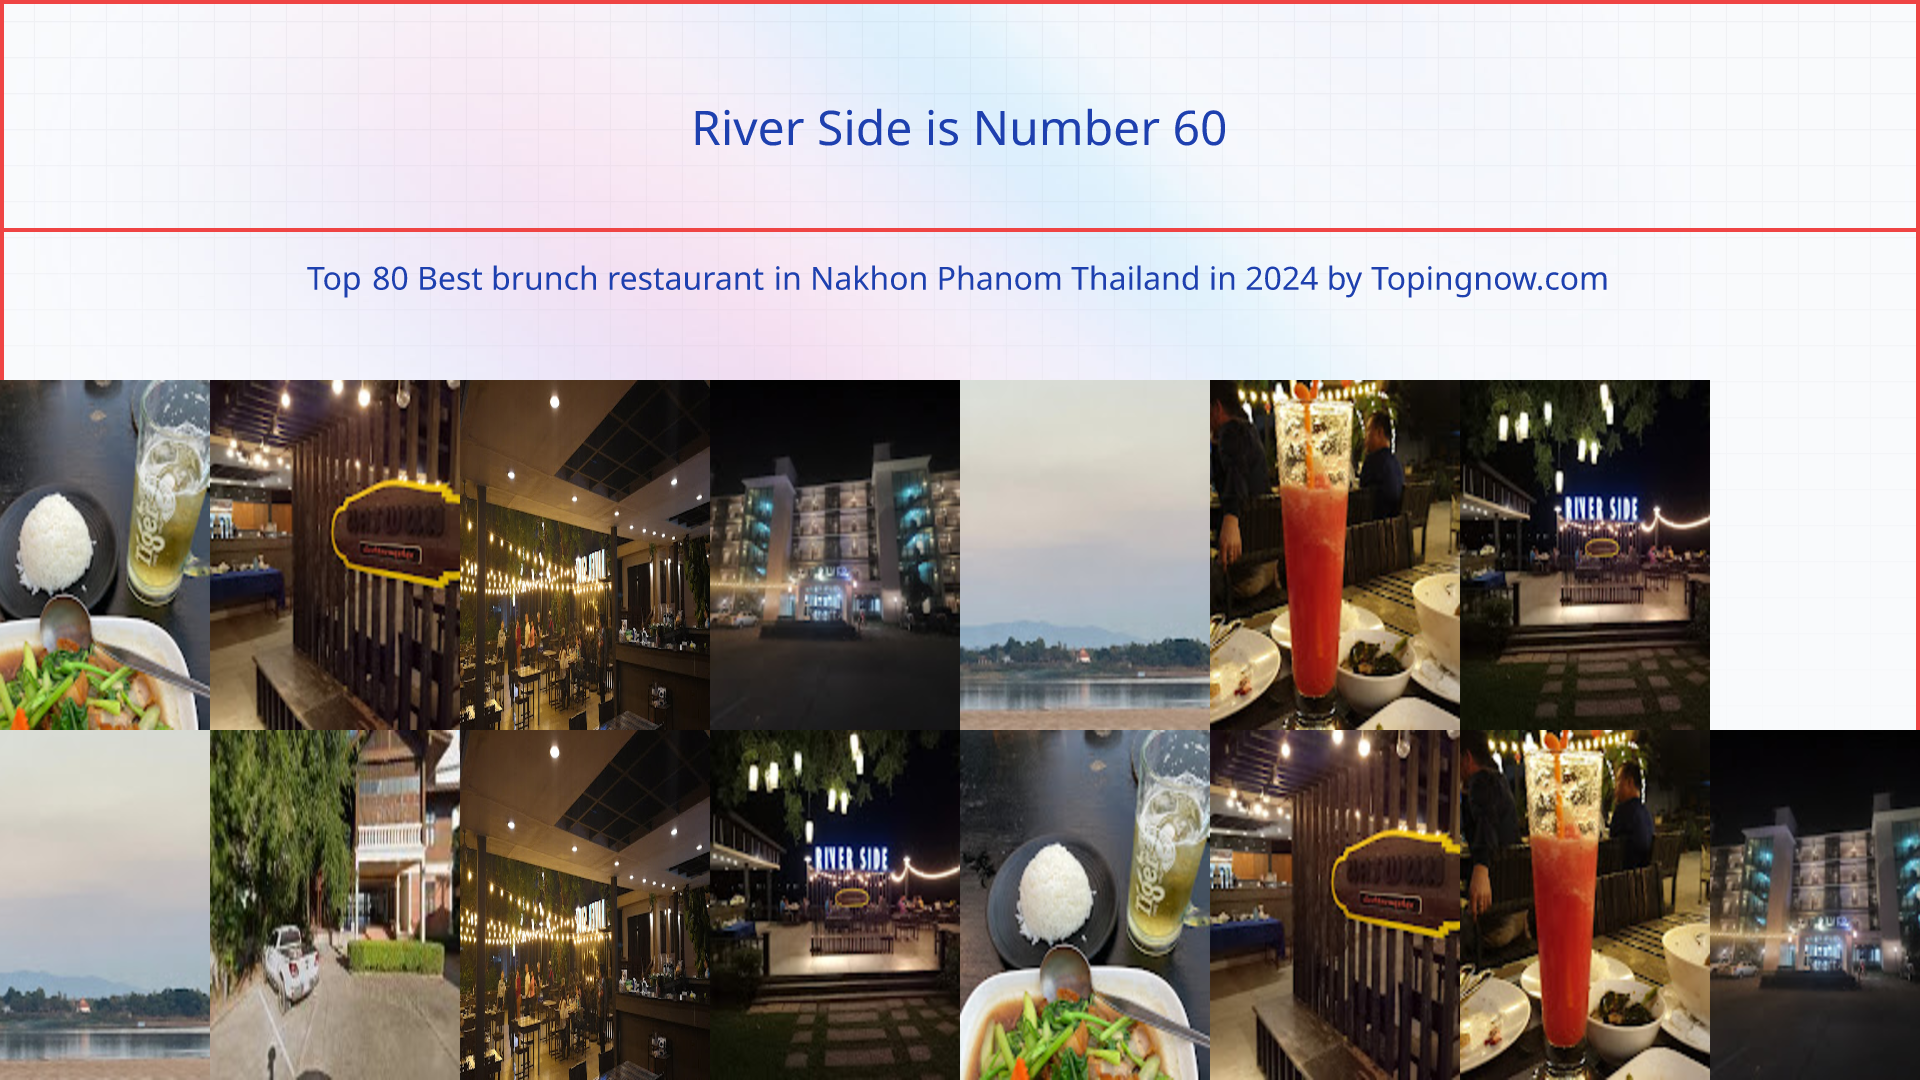 River Side: Top 80 Best brunch restaurant in Nakhon Phanom Thailand in 2024